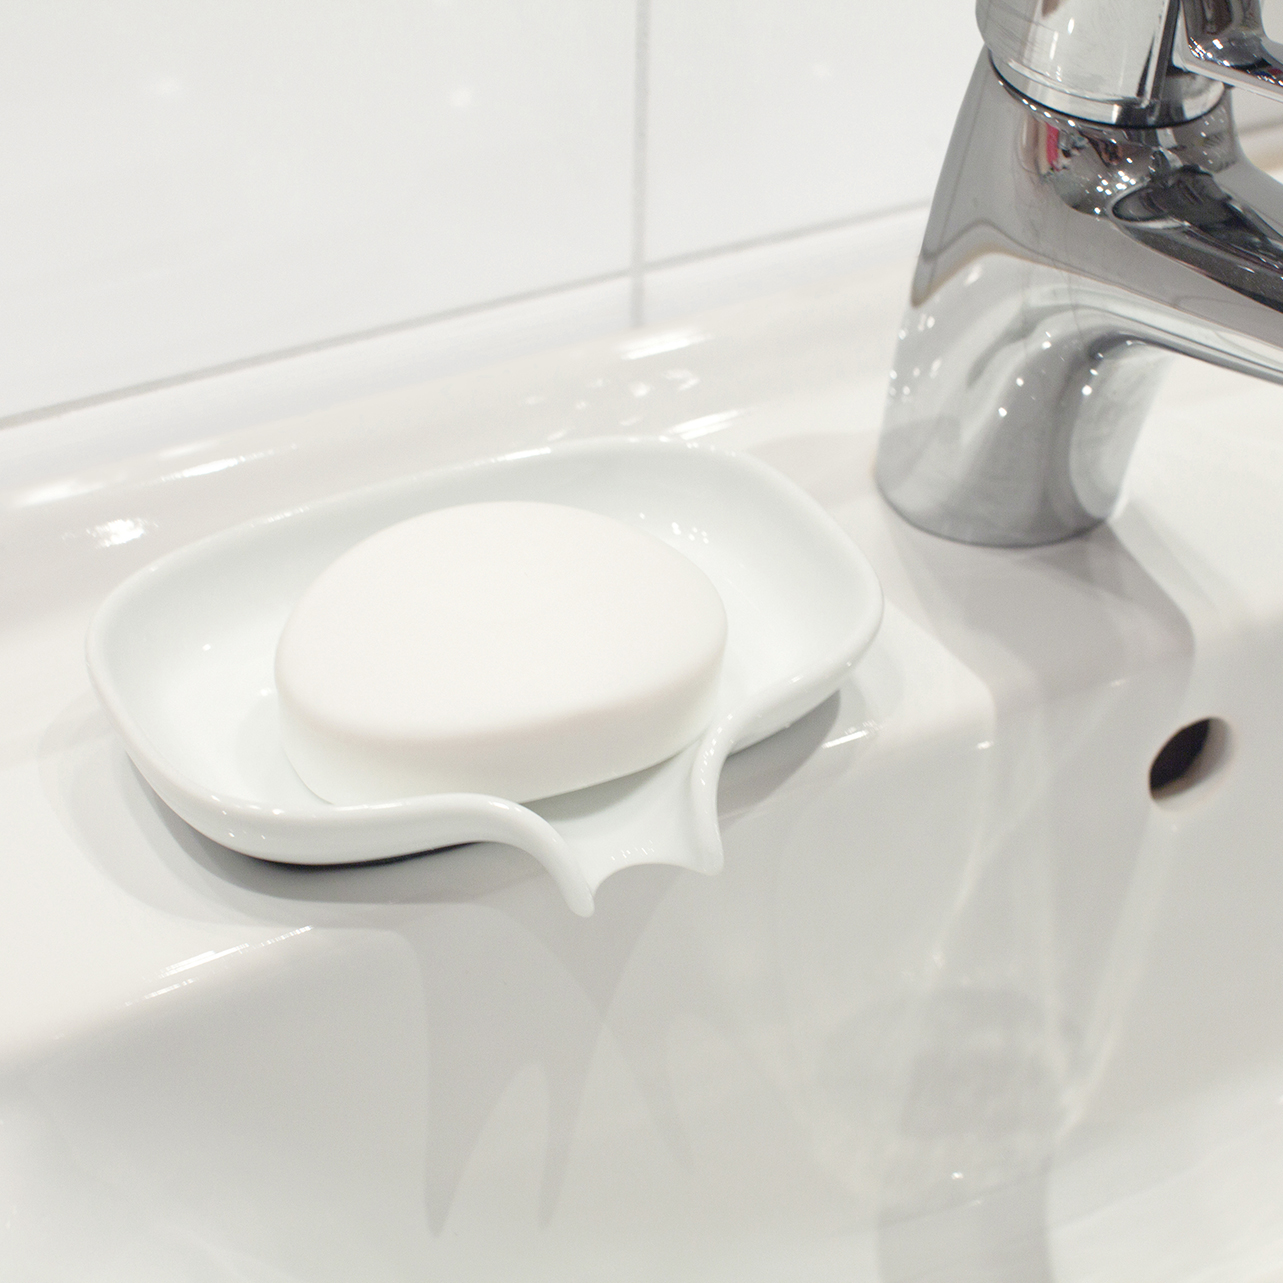 https://www.nordicnest.com/assets/blobs/bosign-soap-dish-with-drainage-spout-porcelain-white/44052-01-02-5436c387c8.jpg